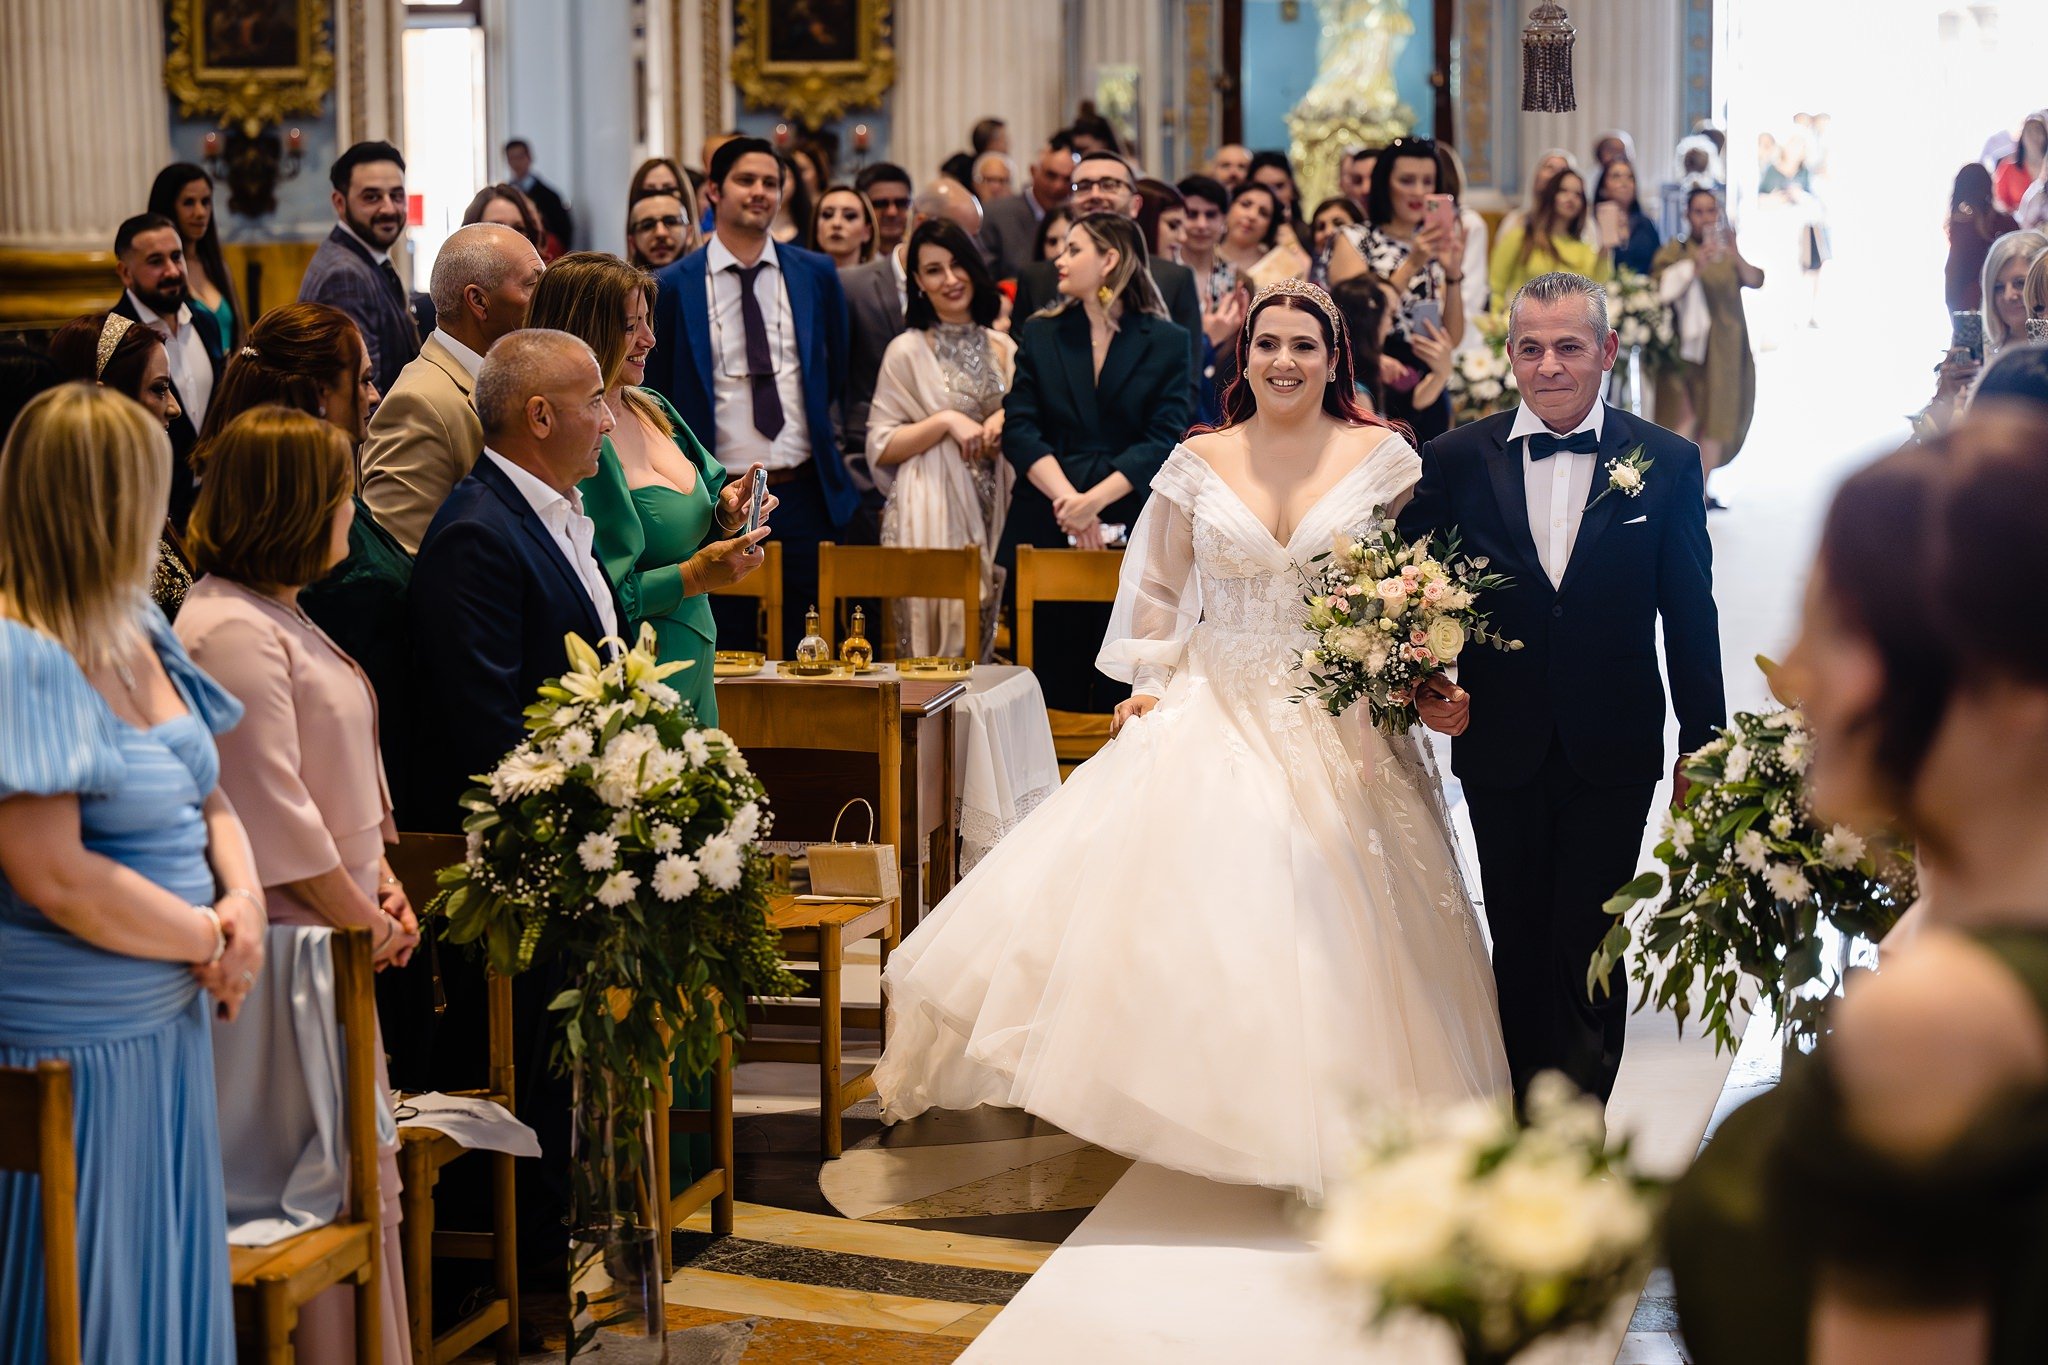 Shanice & Keith's Wedding at Chateau Buskett_0052.jpg